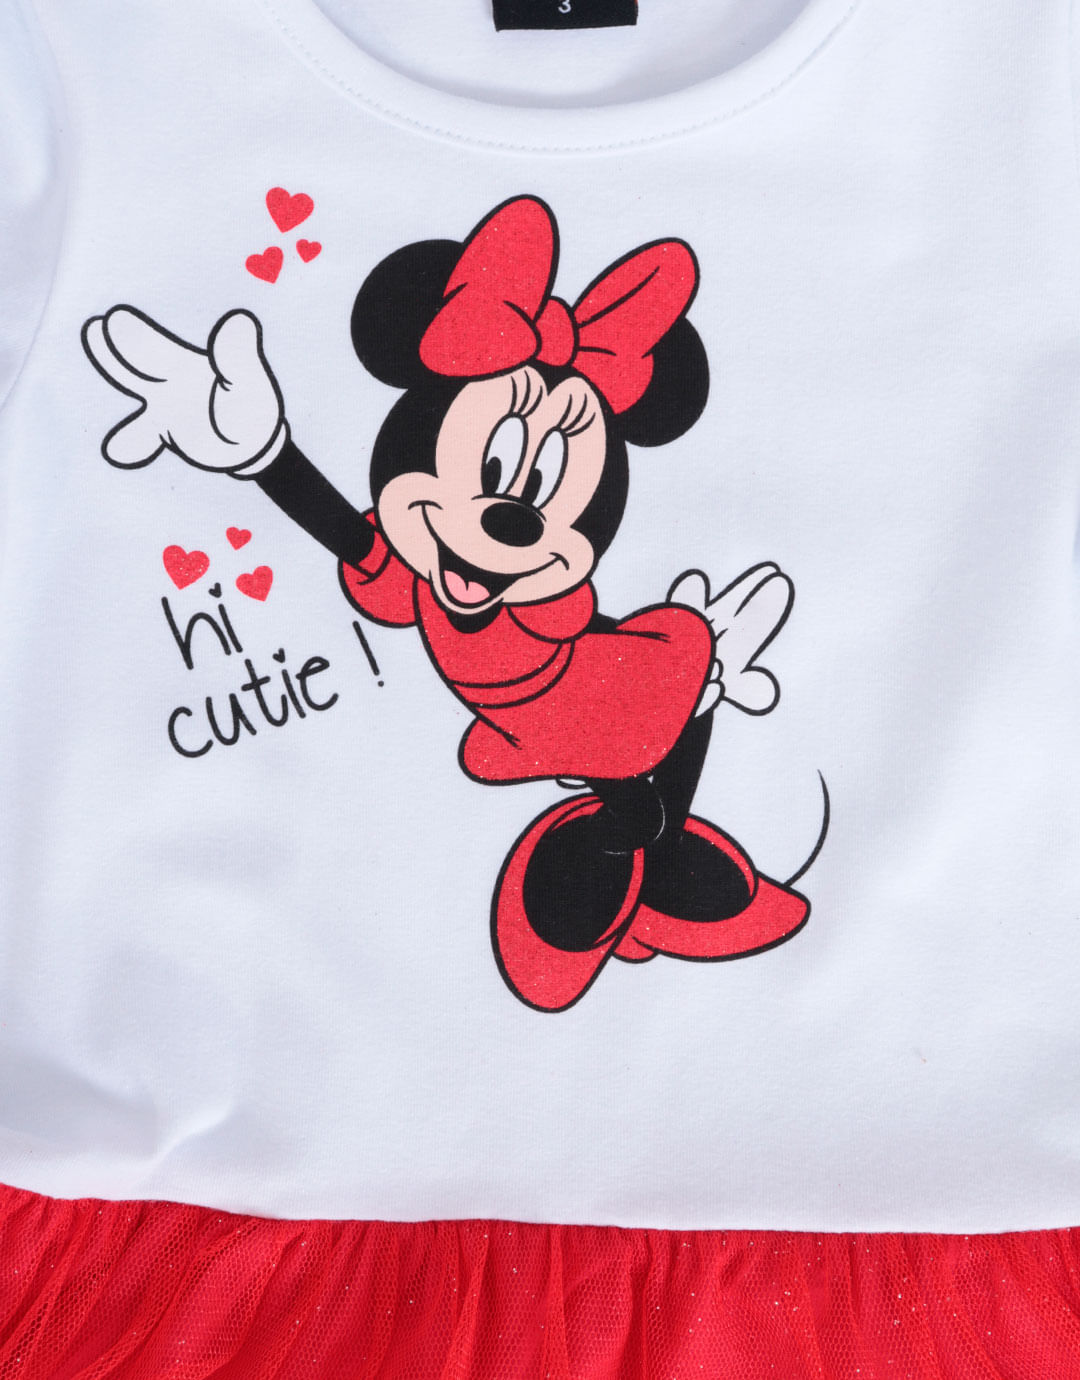 Vestido-Bebe-Manga-Longa-Tule-Minnie-Mouse-Disney-Branco